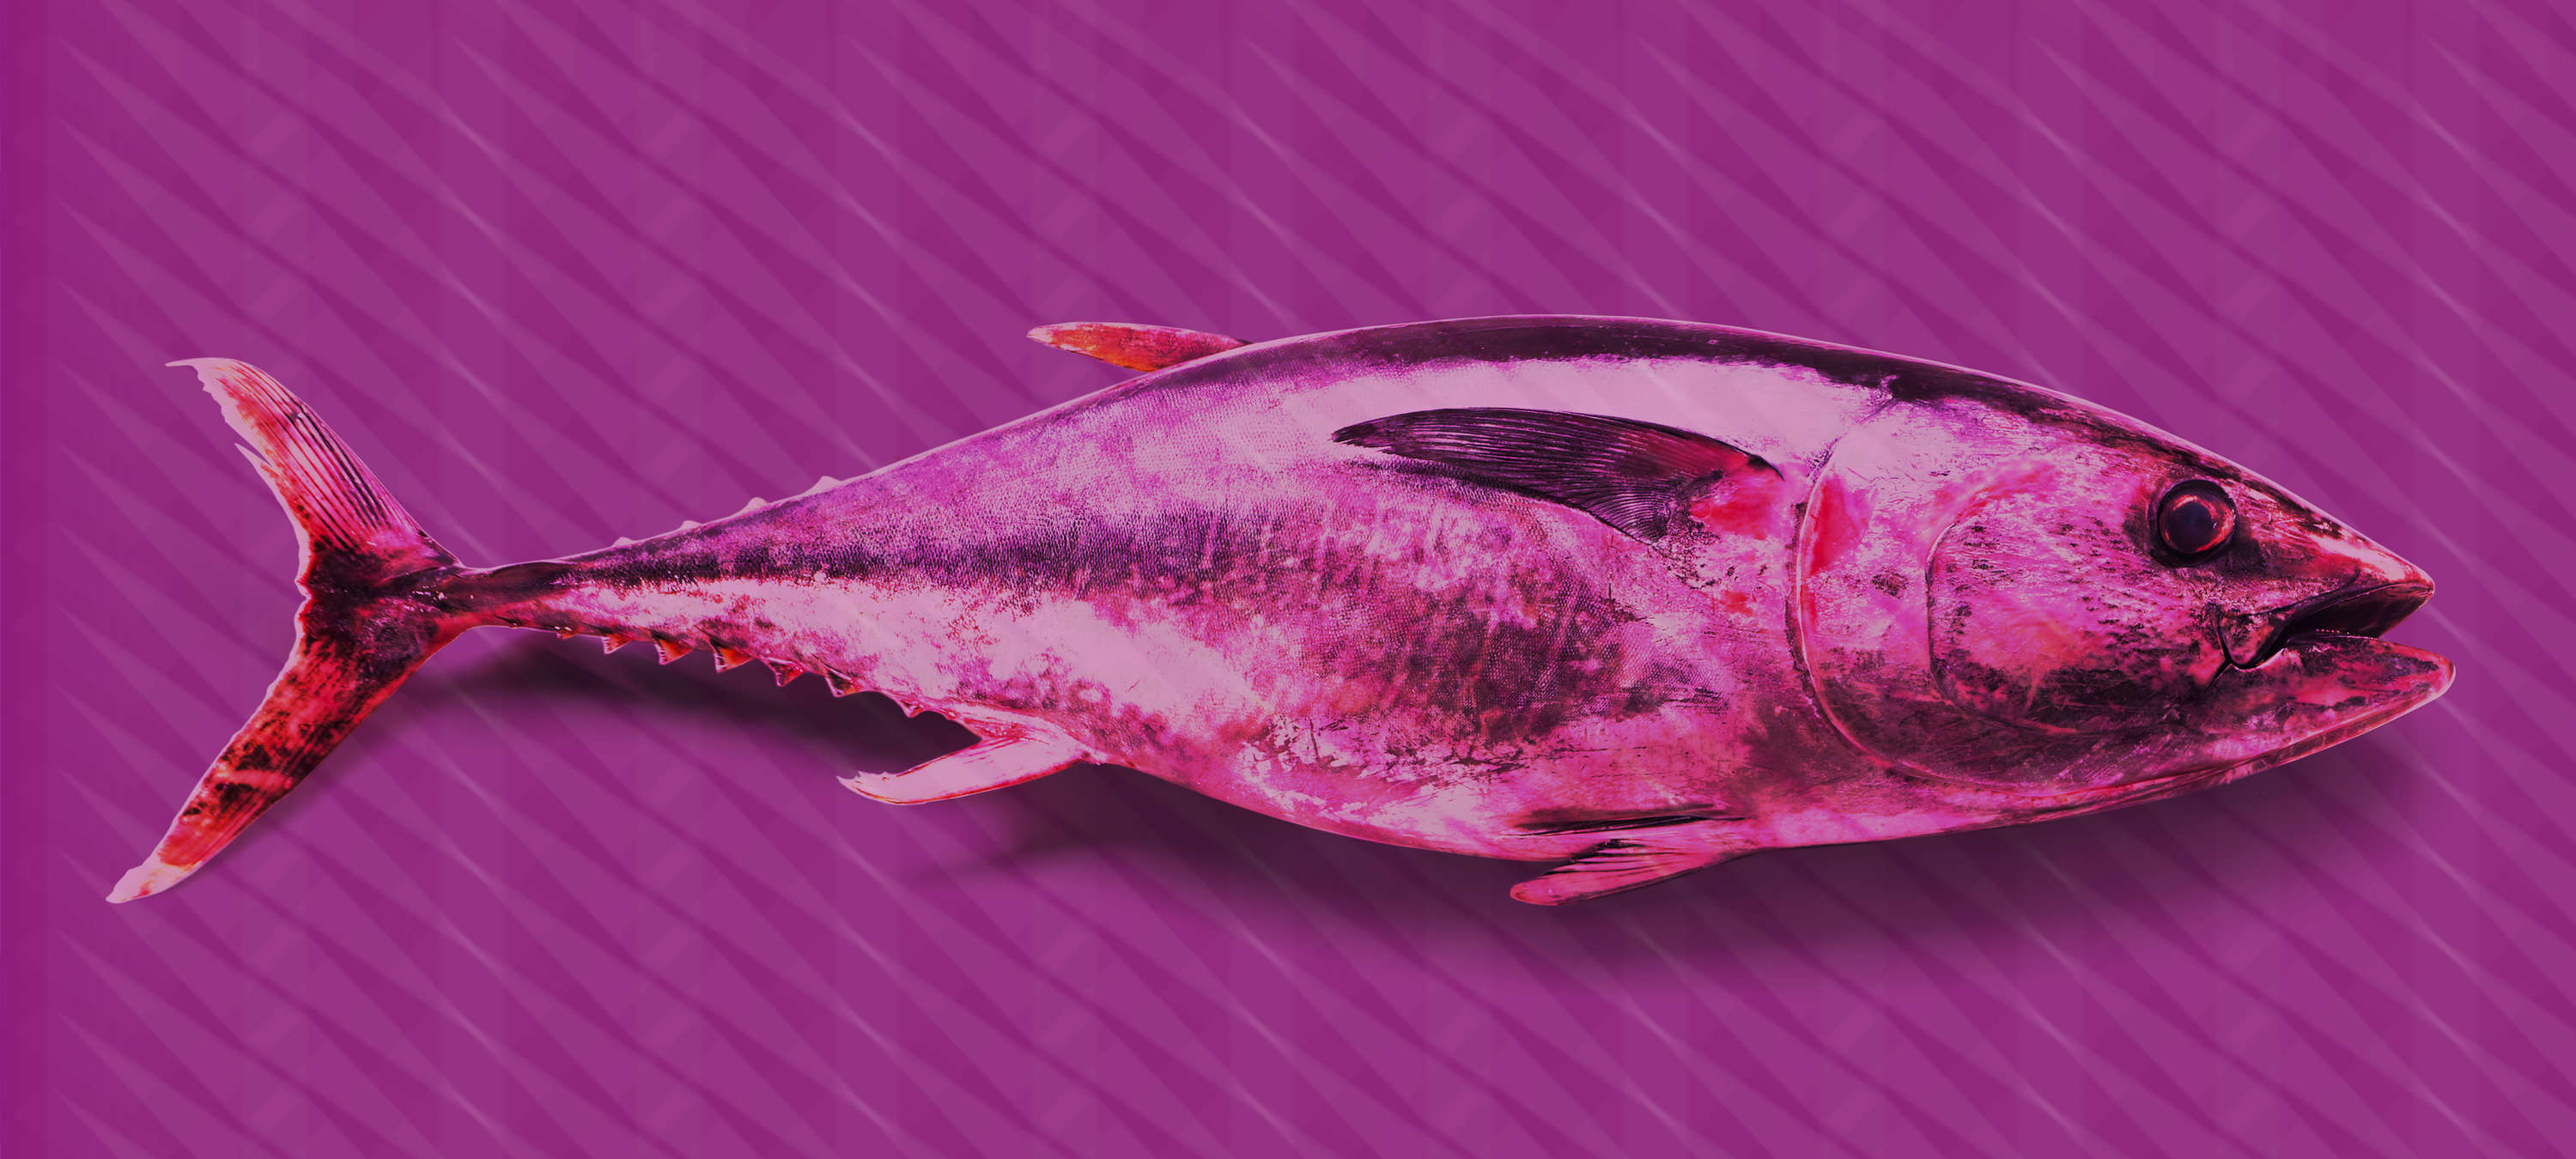             Pop Art stijl tonijn behang - paars, roze, rood - mat glad vlies
        